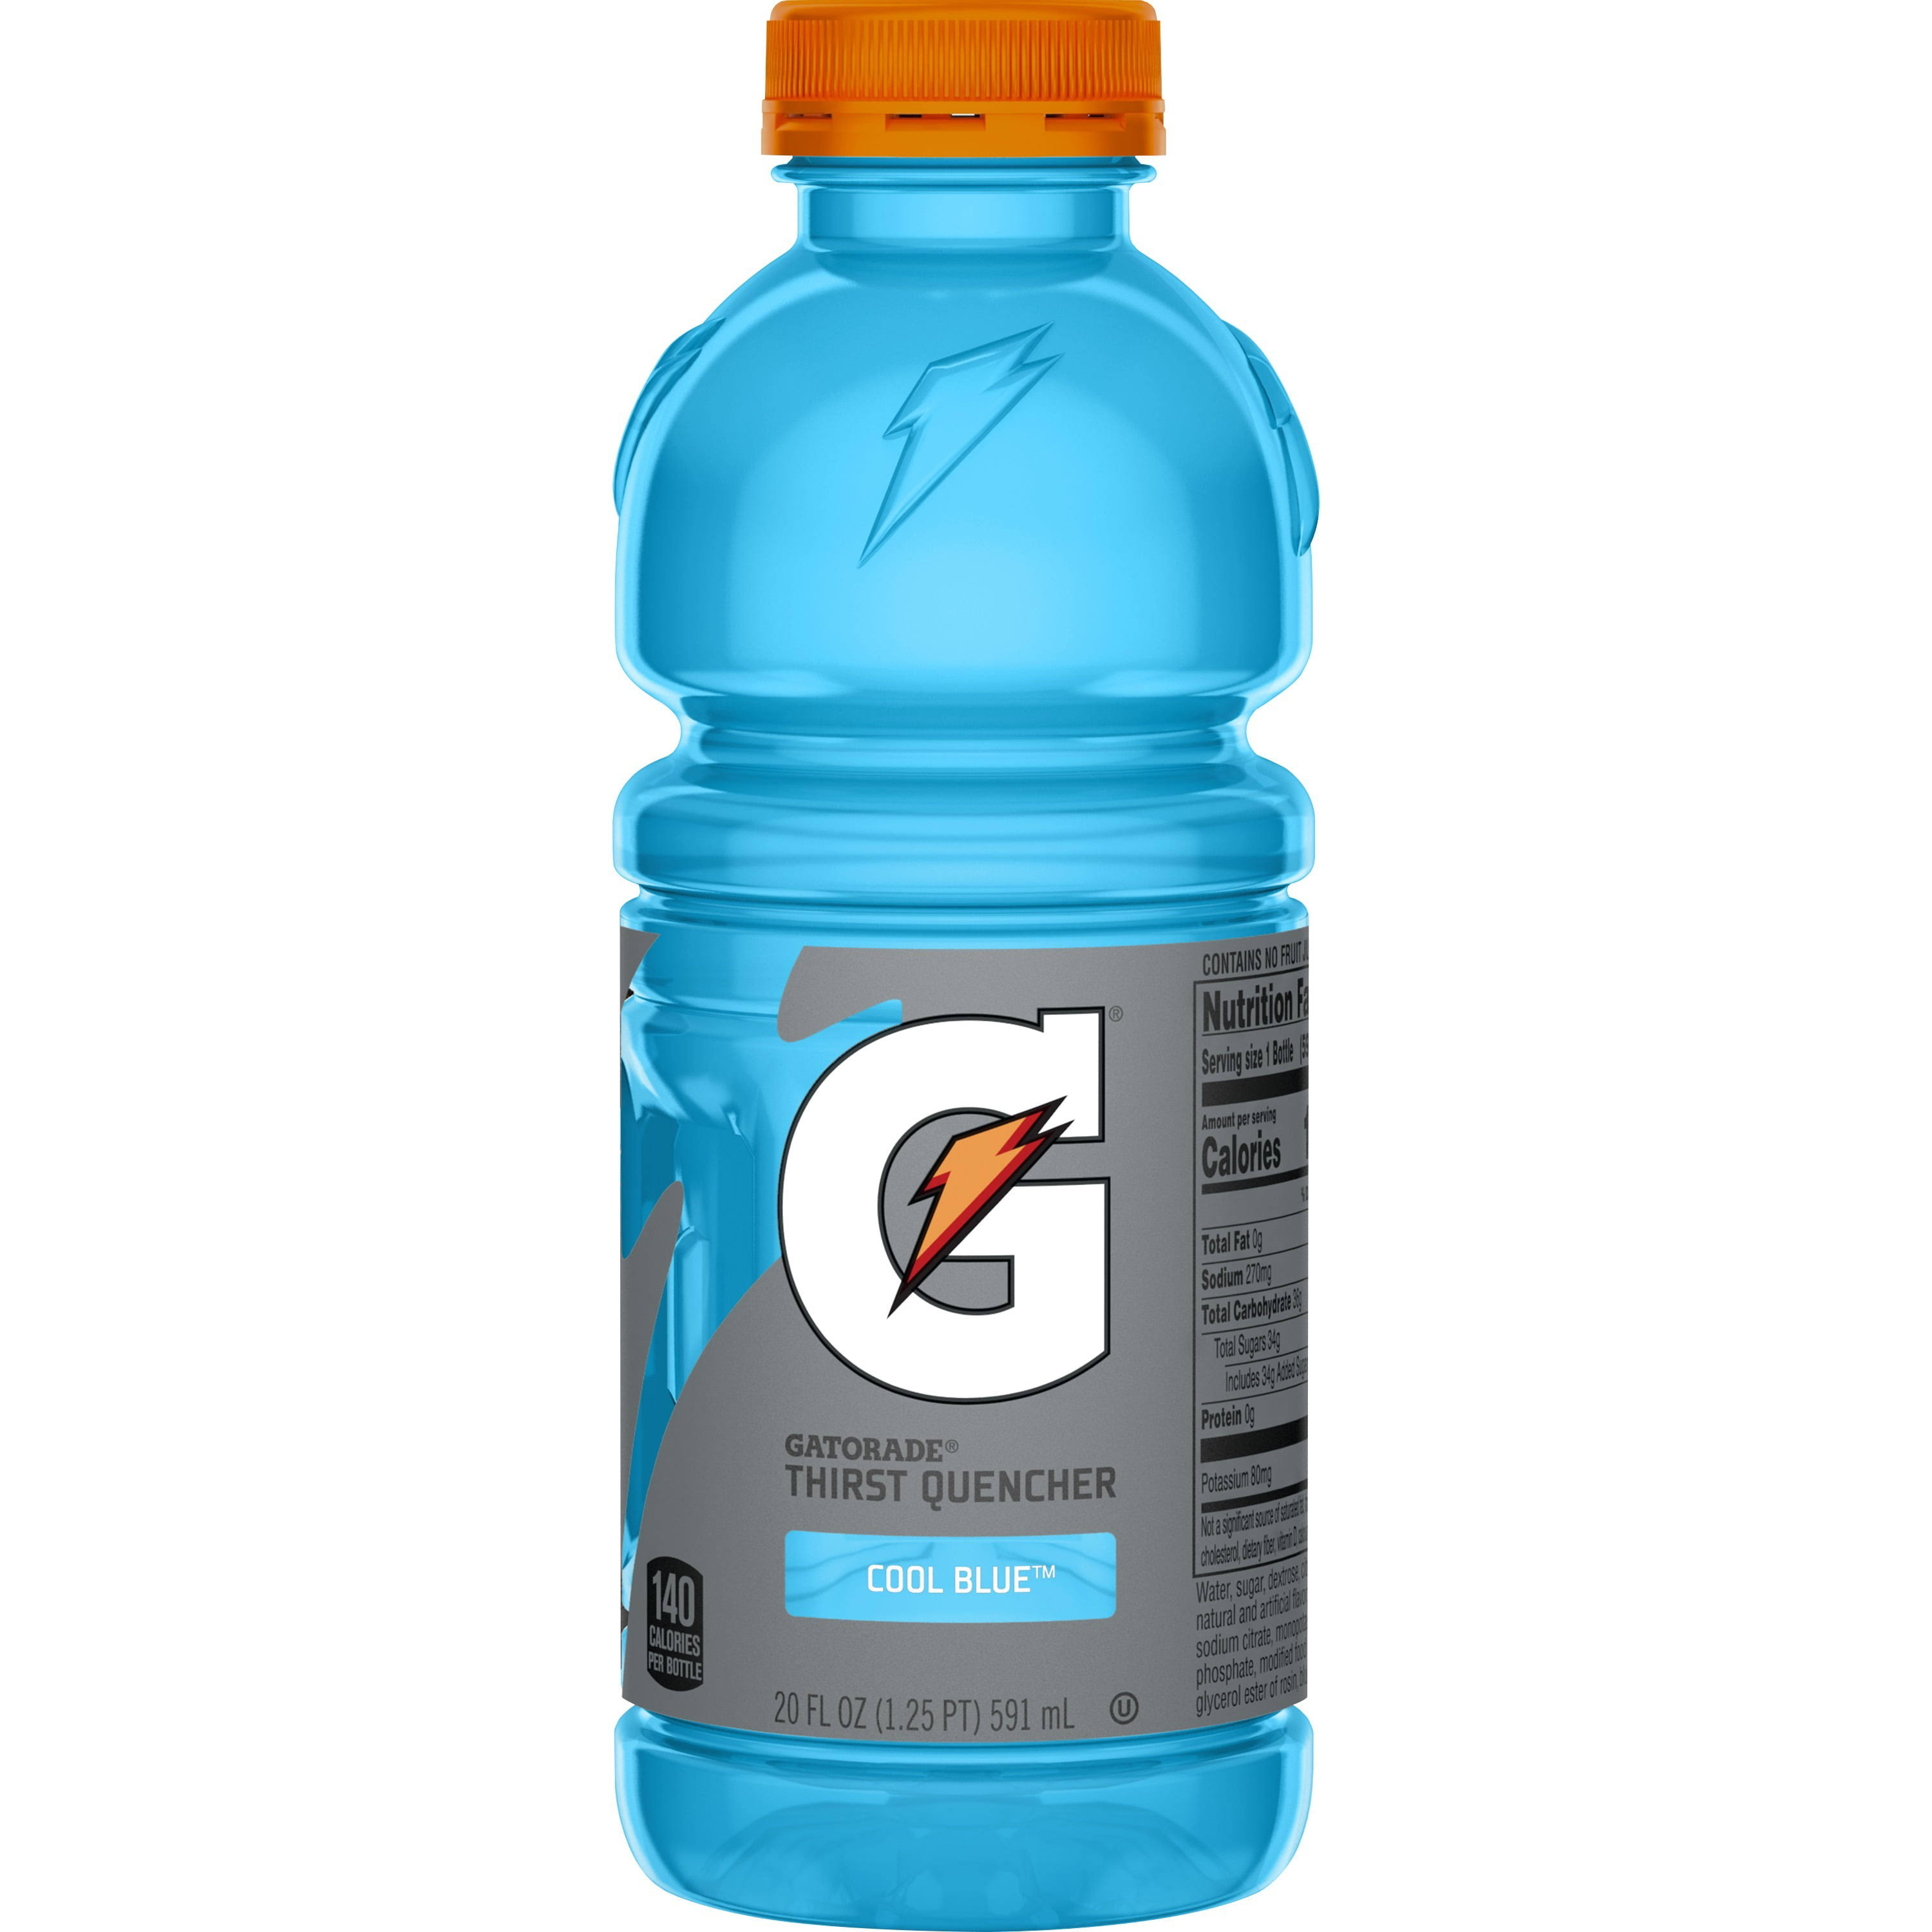 Gatorade Thirst Quencher - Cool Blue, 591ml